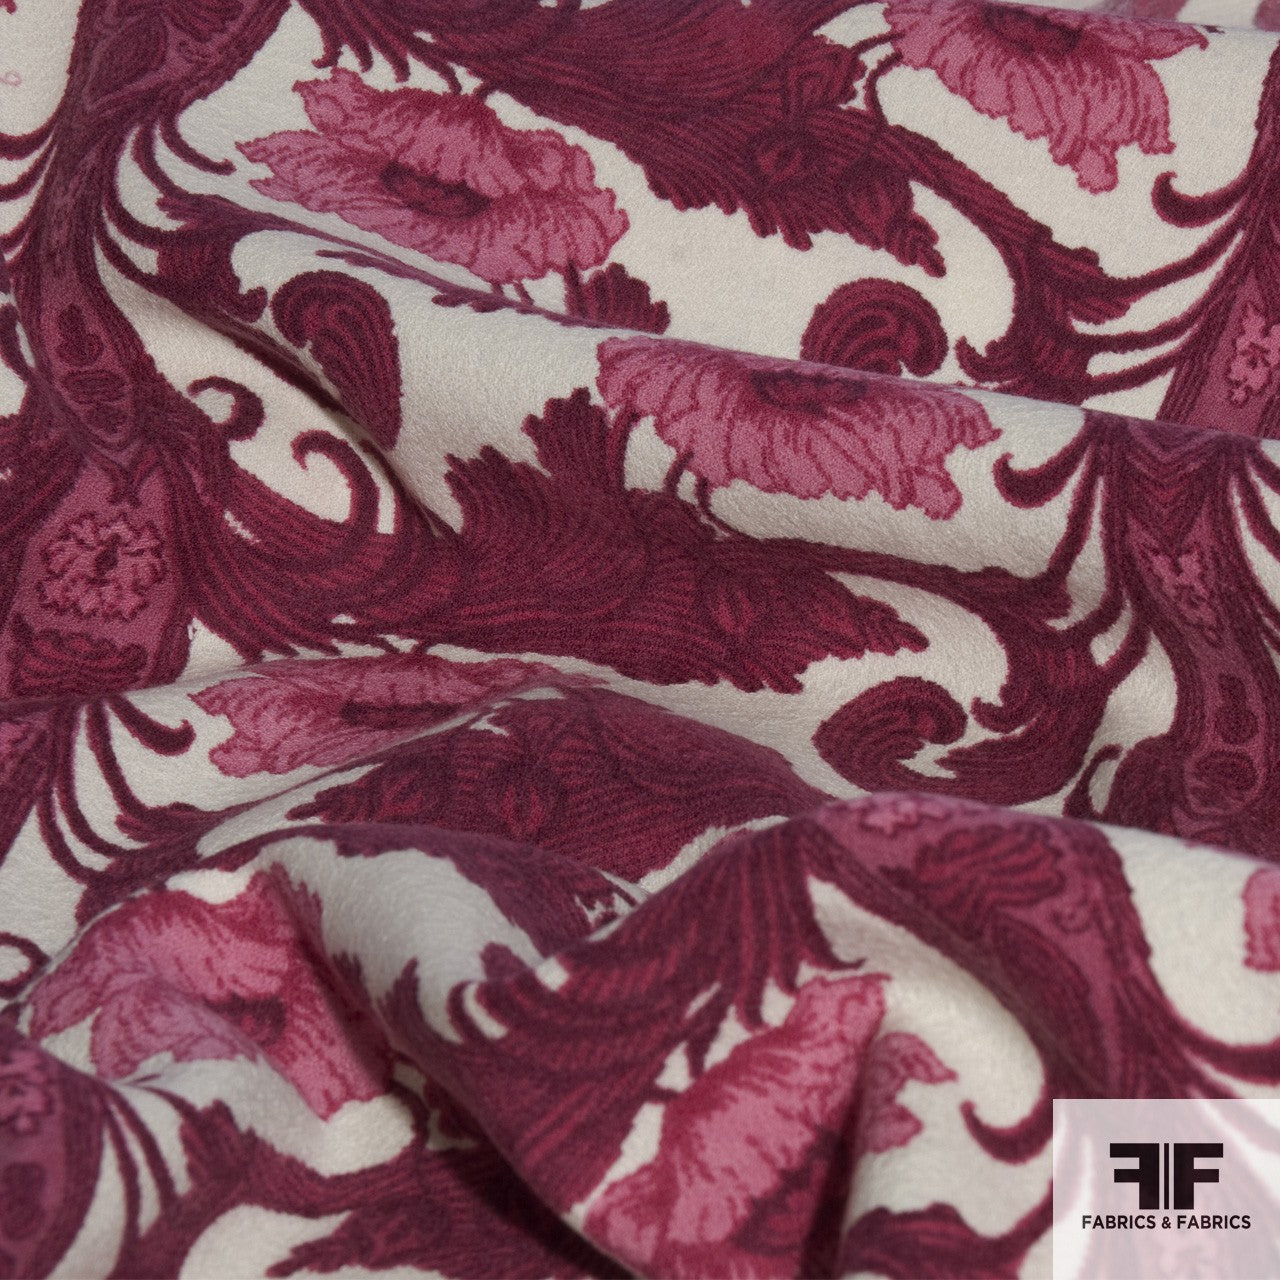 Floral Wool Crepe - Fuchsia/Pink/Cream